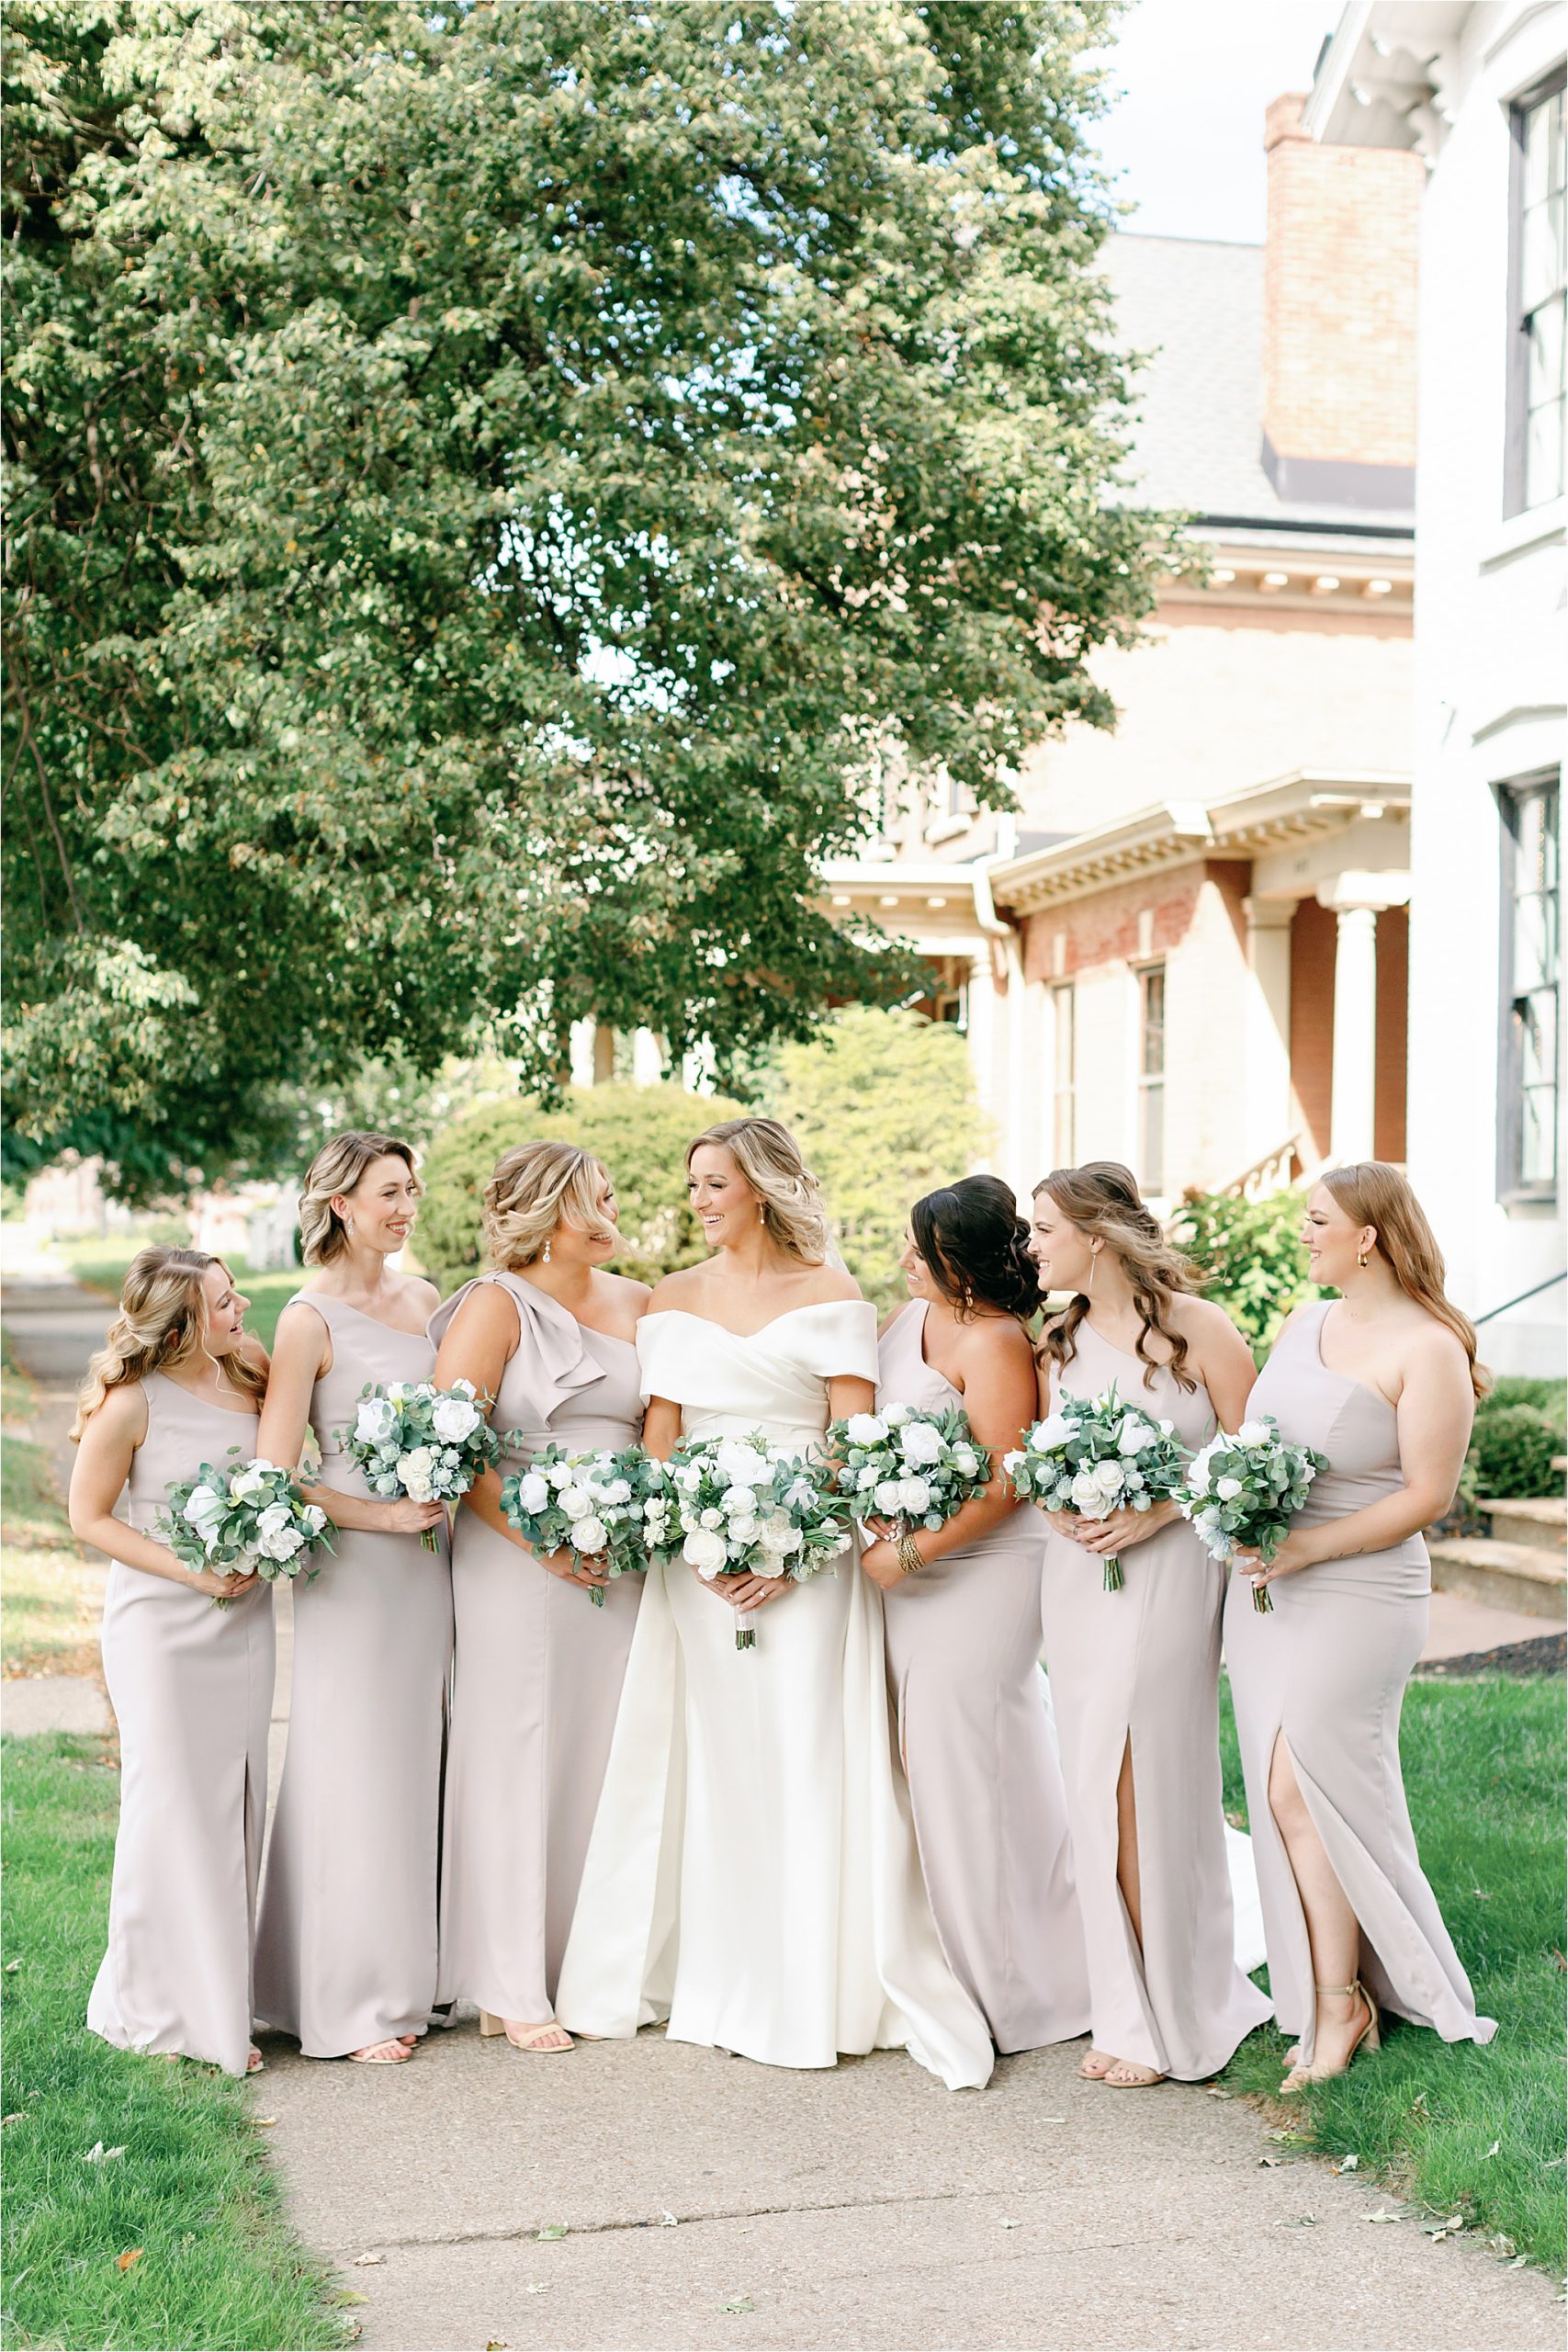 Mauve and white wedding scheme on bridesmaids